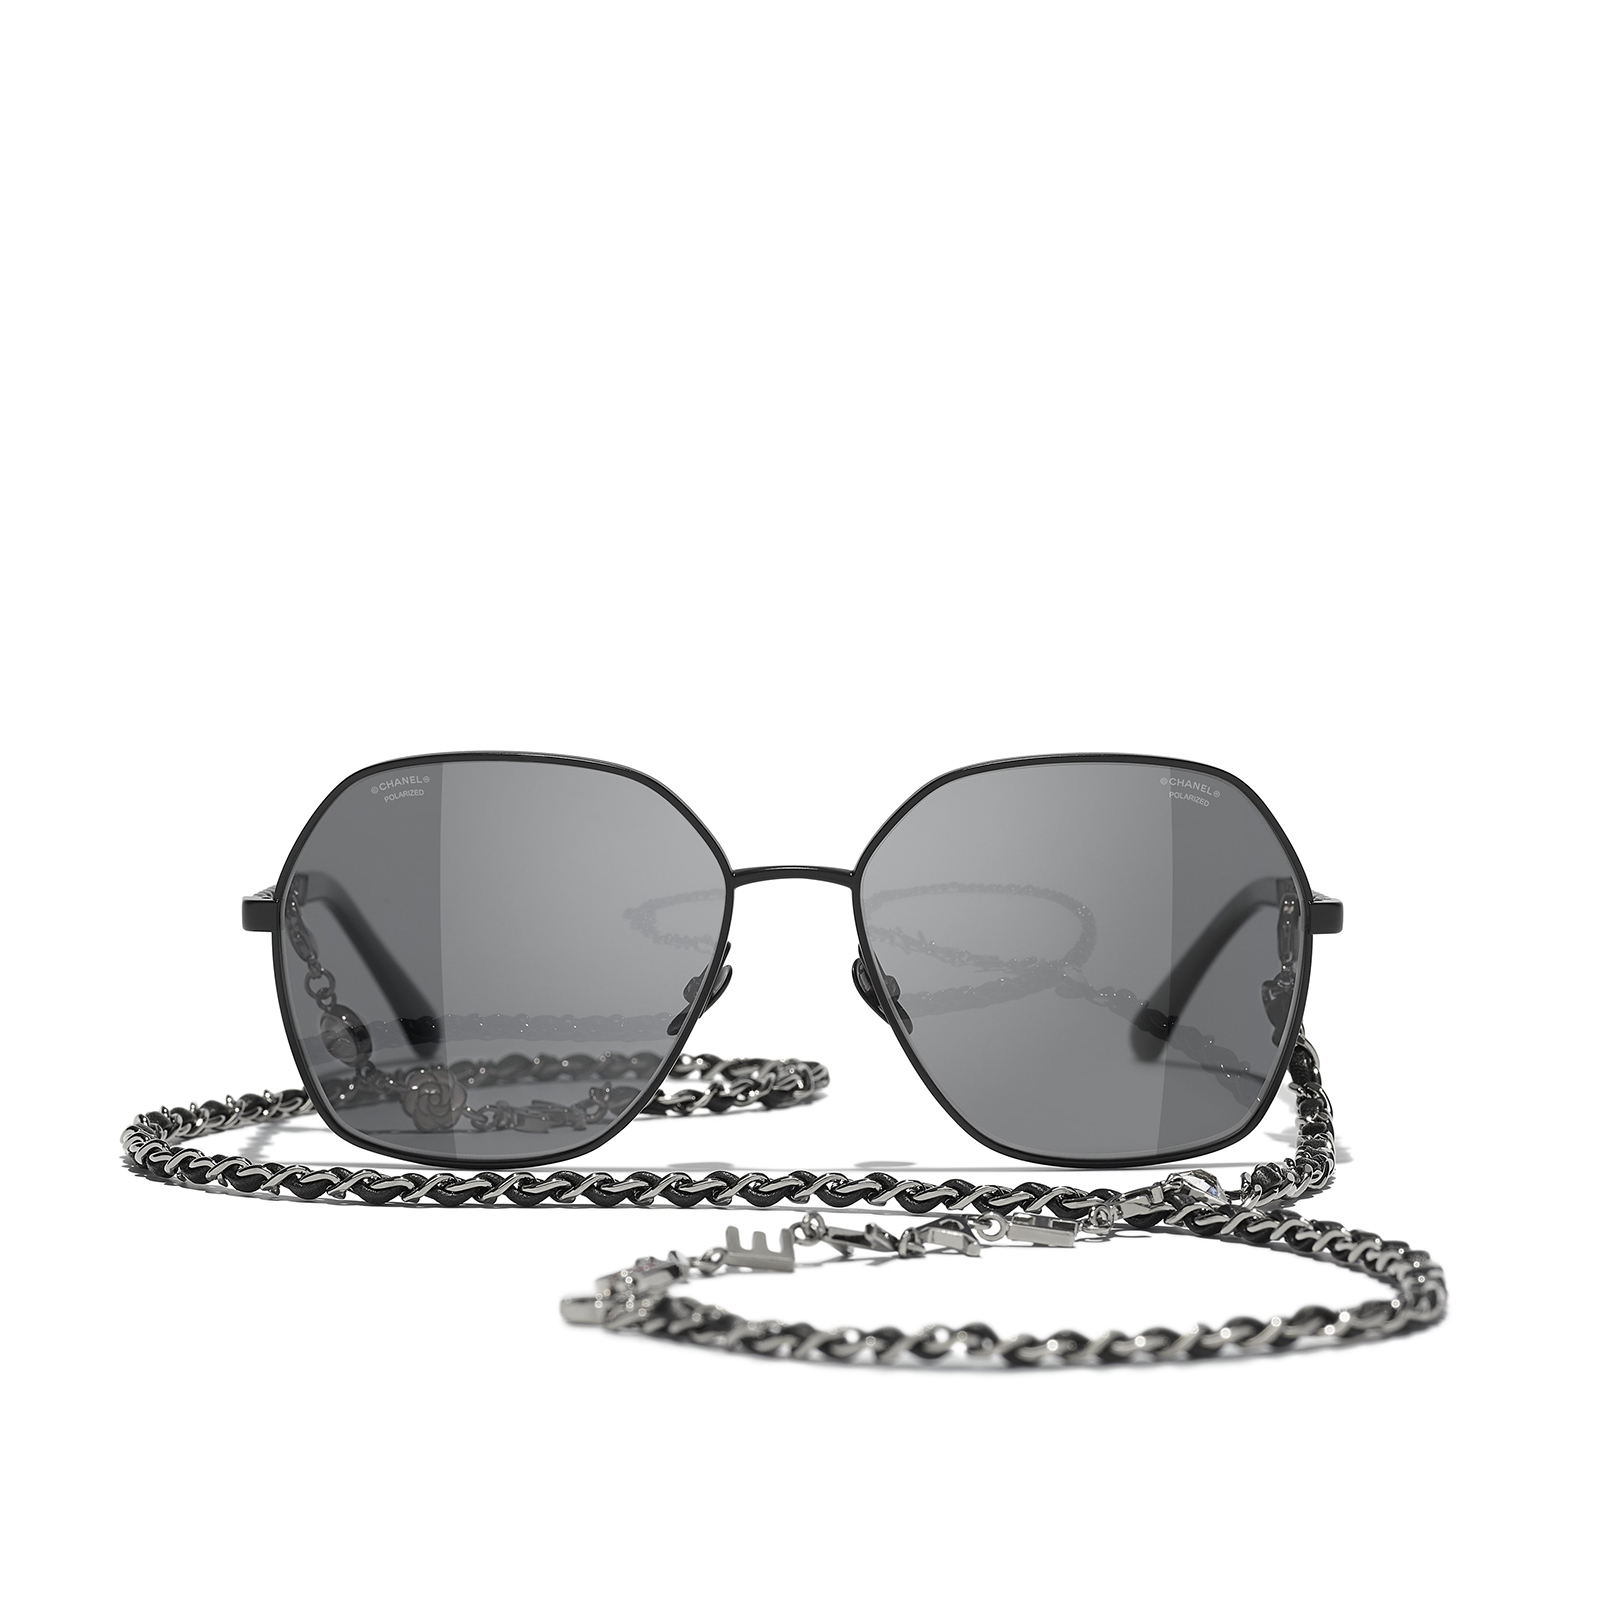 CHANEL square Sunglasses C101T8 Black - front view